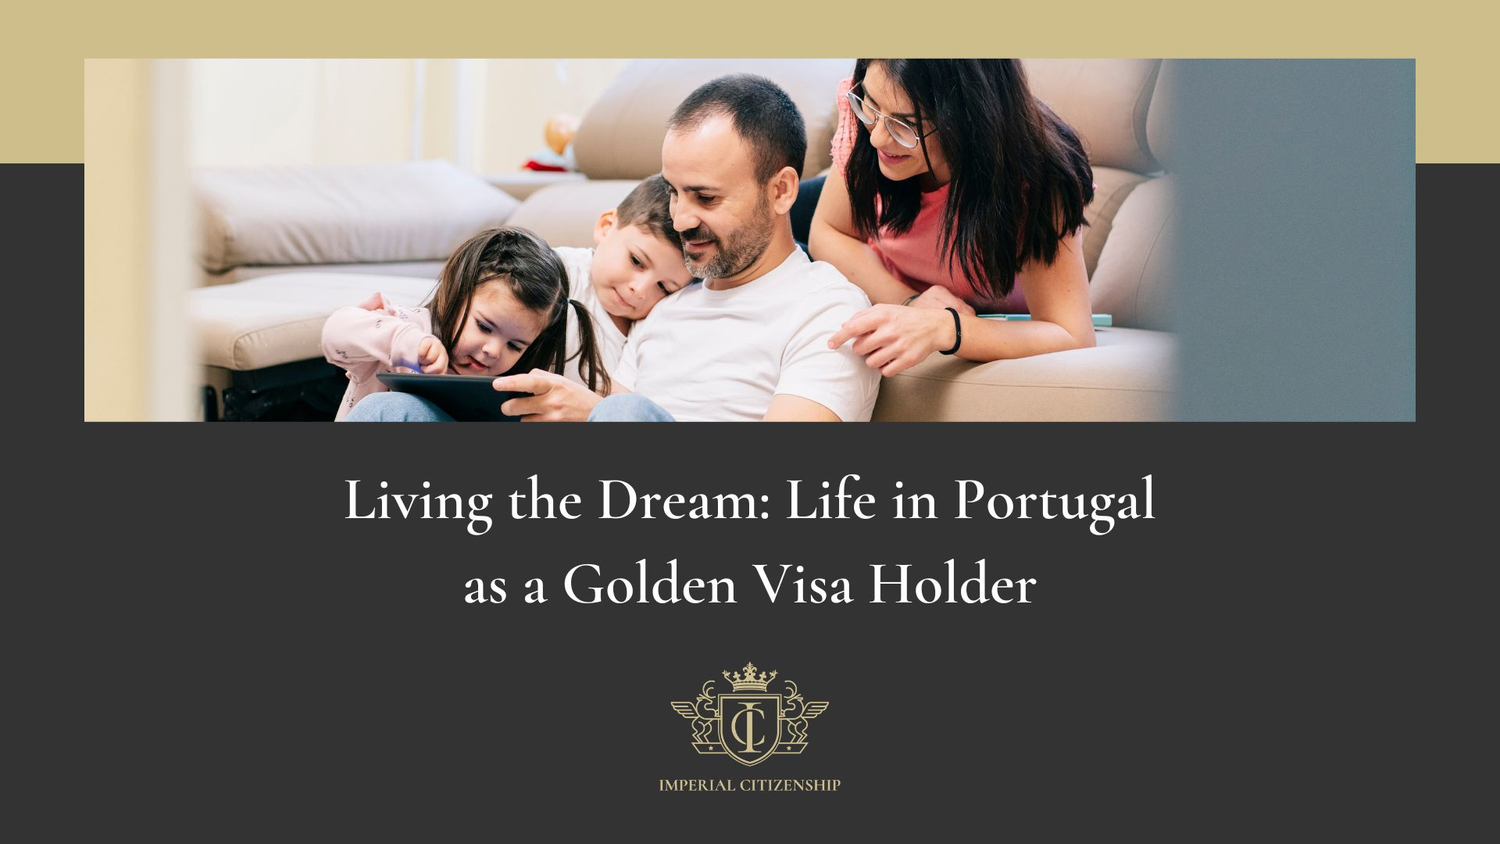 Life in Portugal as a Golden Visa Holder